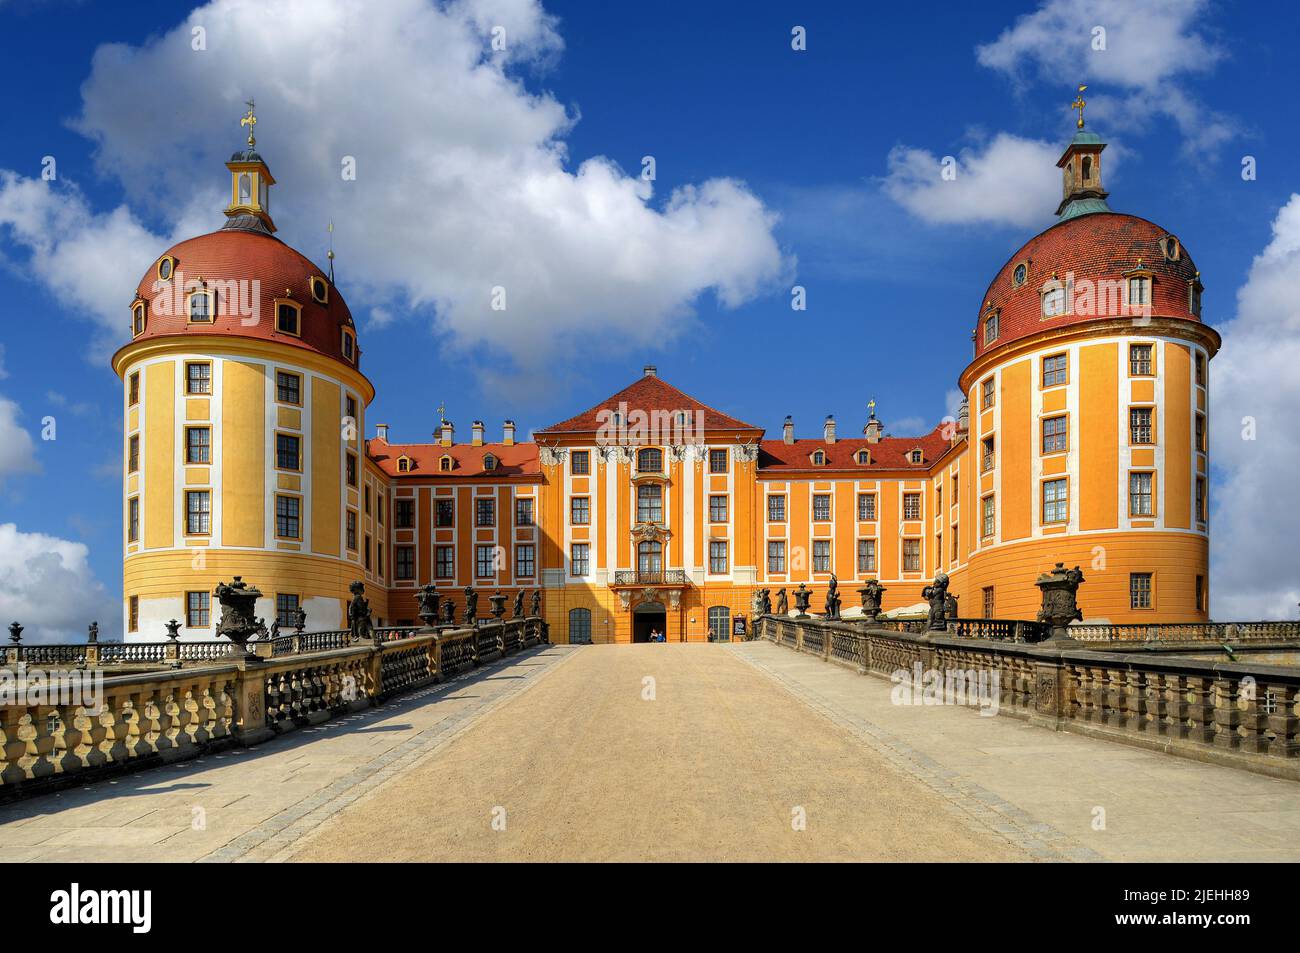 Barockschloss Moritzburg, Dresden, Freistaat Sachsen, Deutschland, Europa Stock Photo